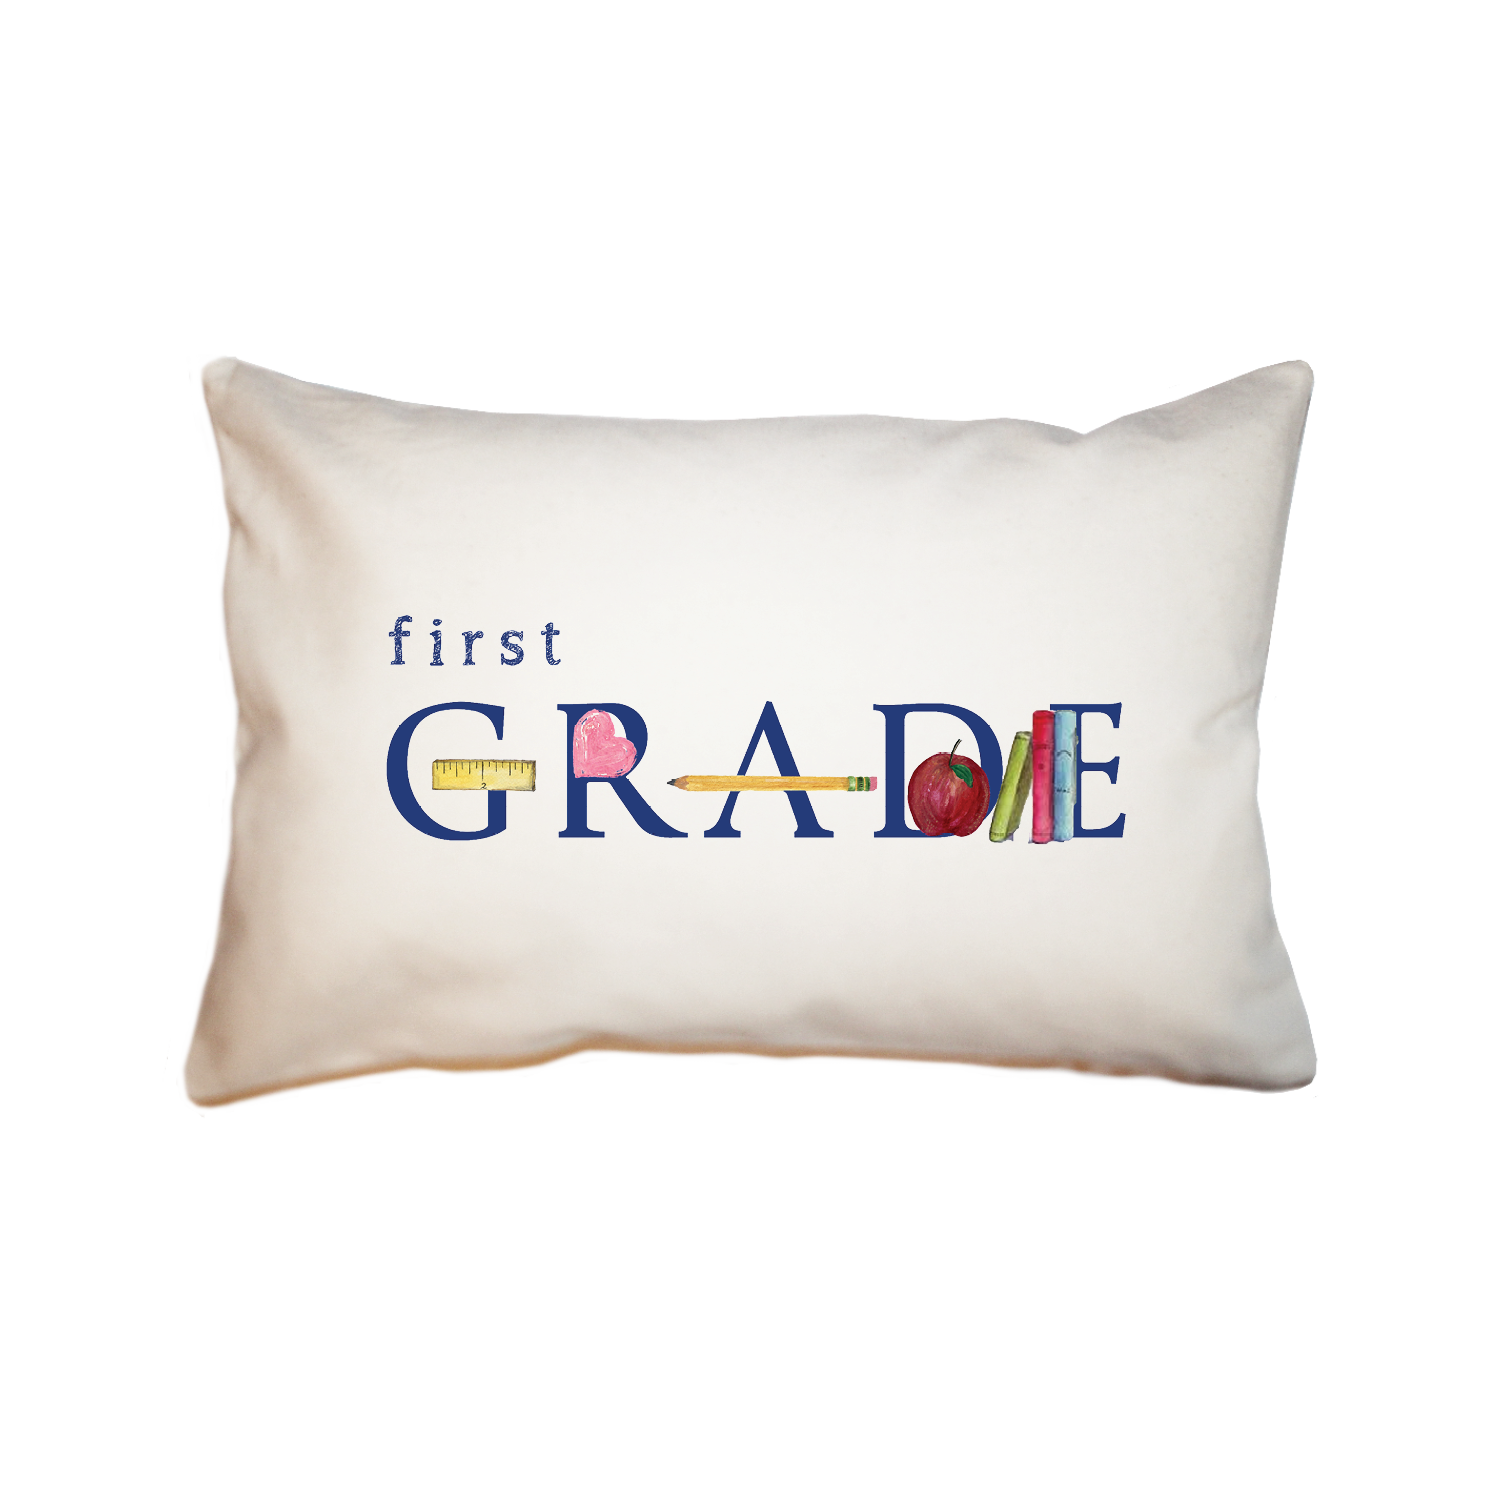 first grade large rectangle pillow